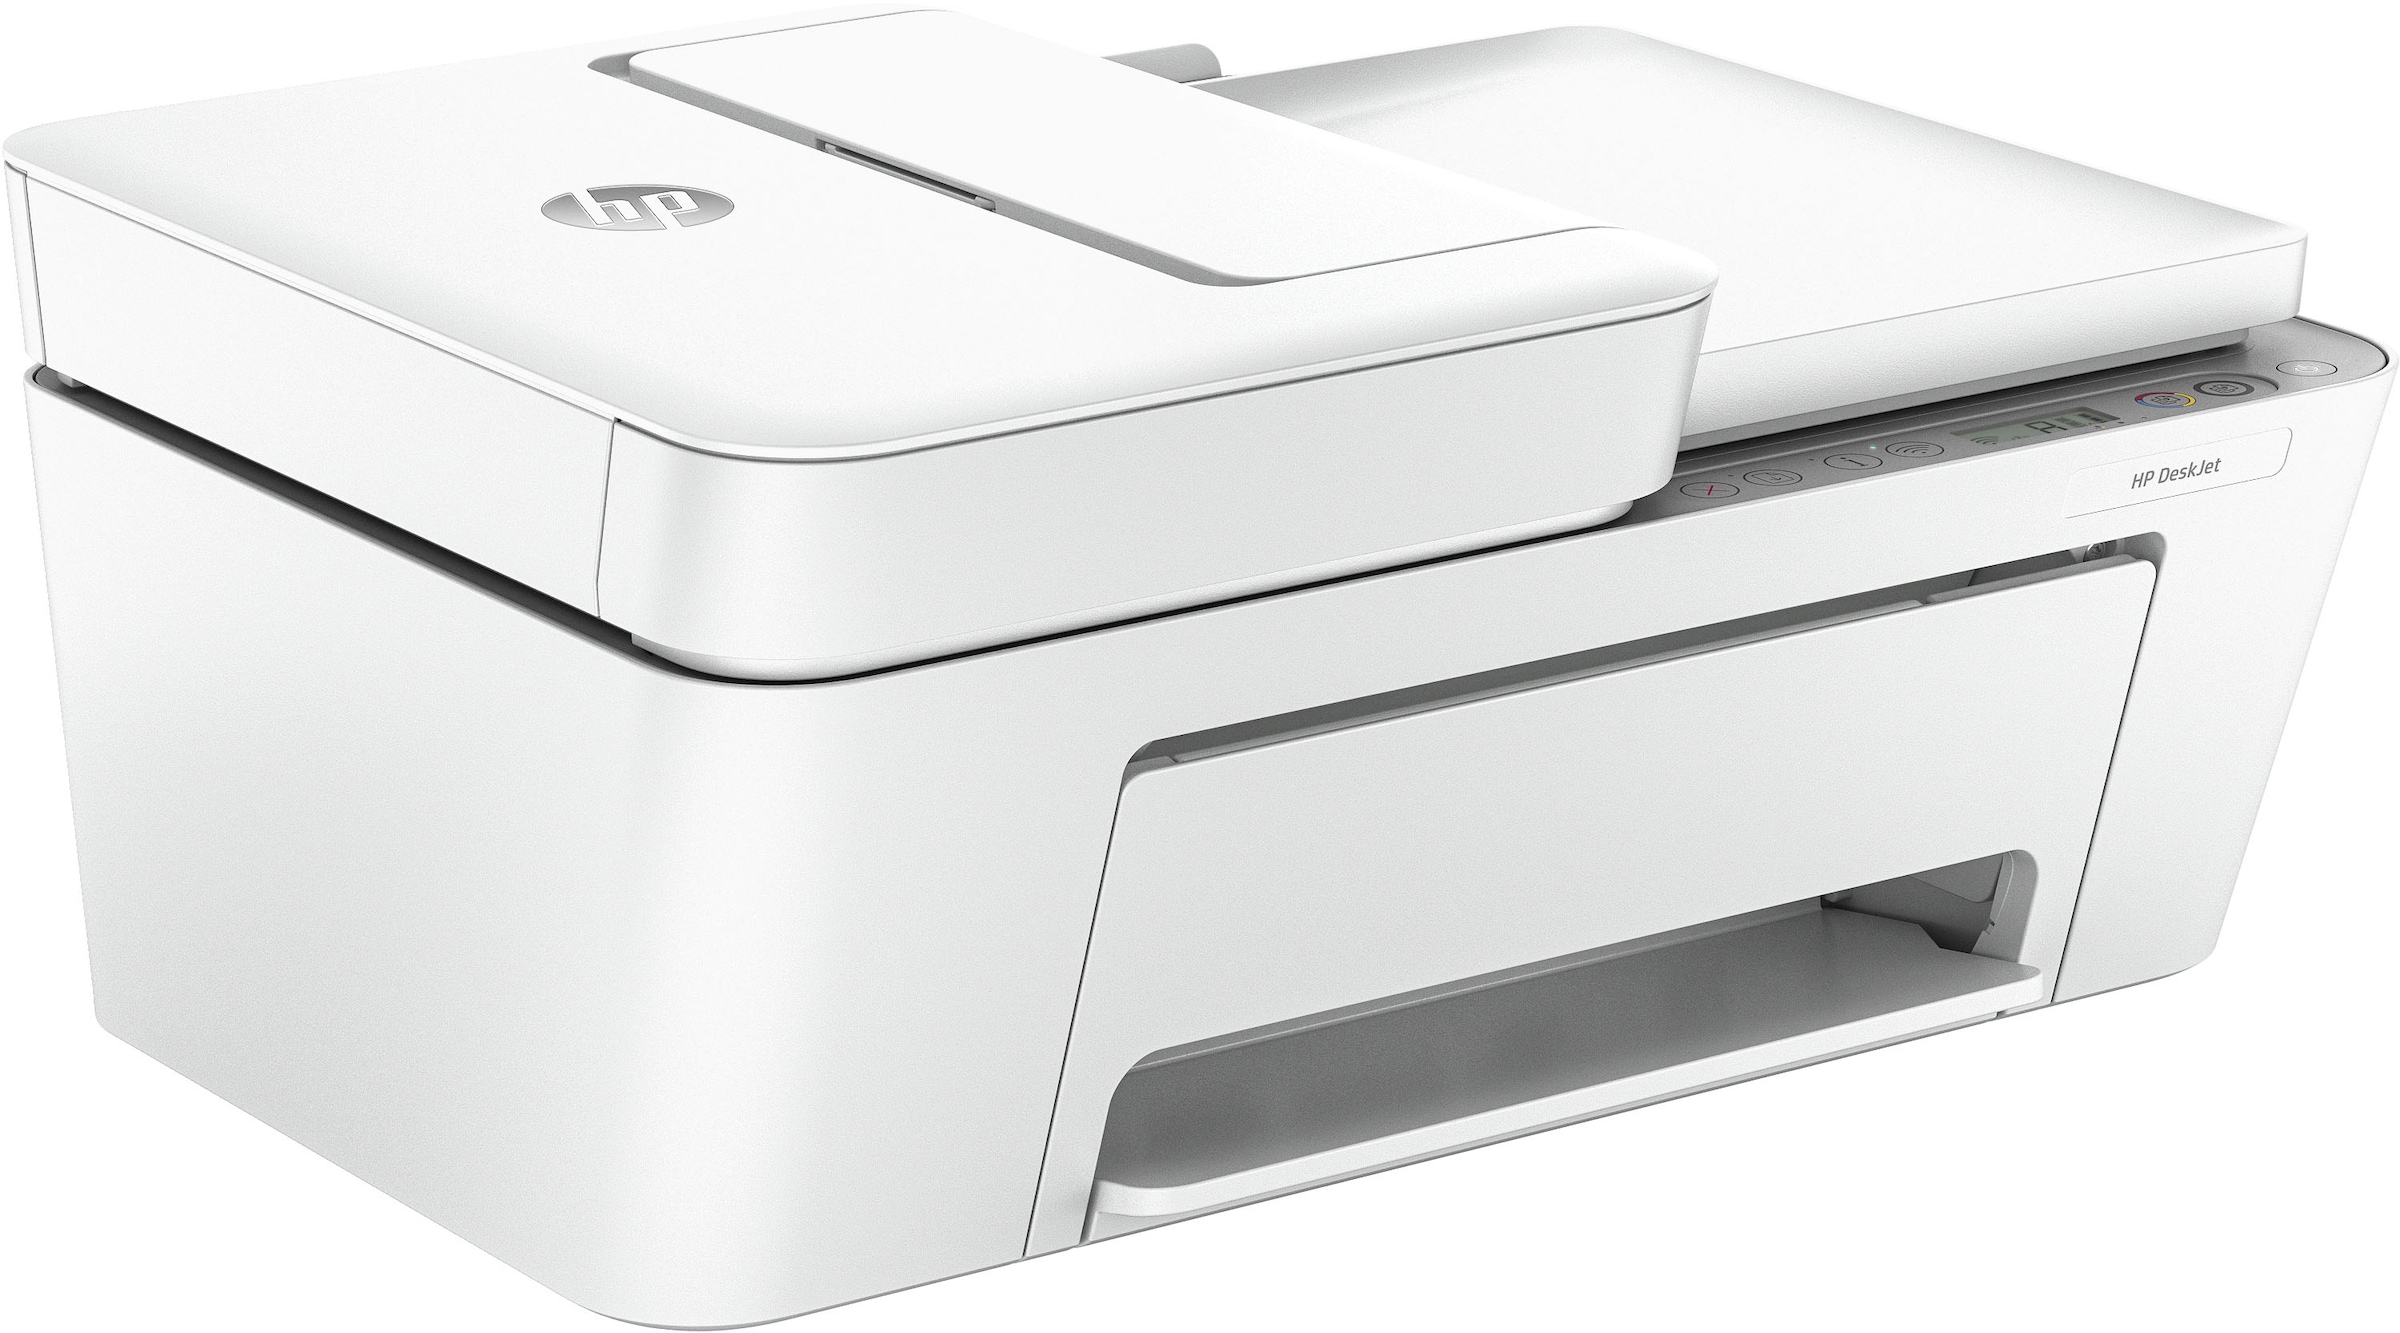 HP Multifunktionsdrucker »DeskJet 4220e«, 3 Monate gratis Drucken mit HP Instant Ink inklusive